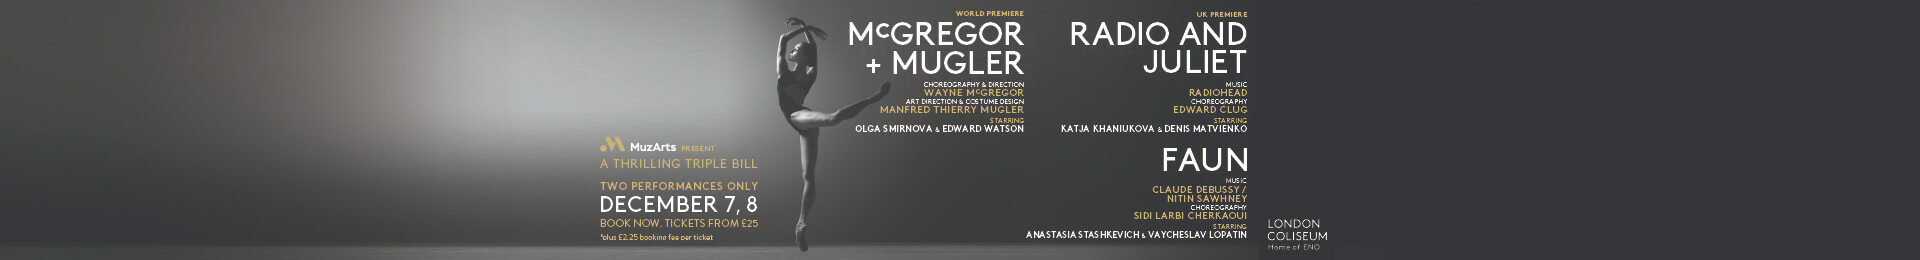 Radio & Juliet | Faun | MсGregor + Mugler banner image